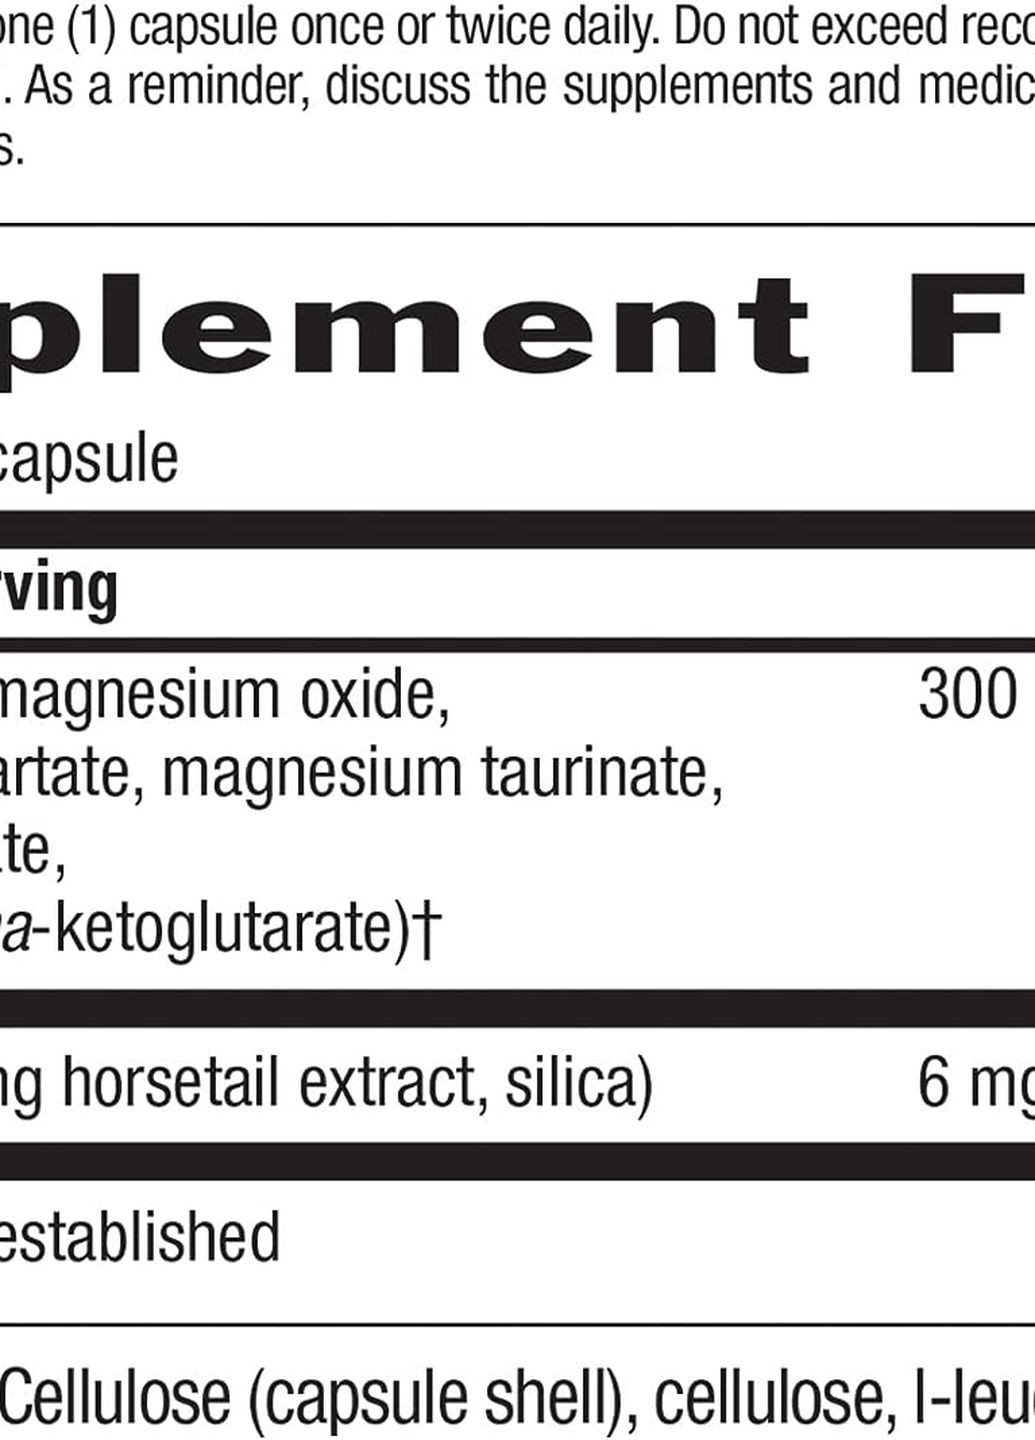 Магний с кремнием Target-Mins Magnesium Caps with Silica 300 mg 60 Vegan Capsules Country Life (277270270)